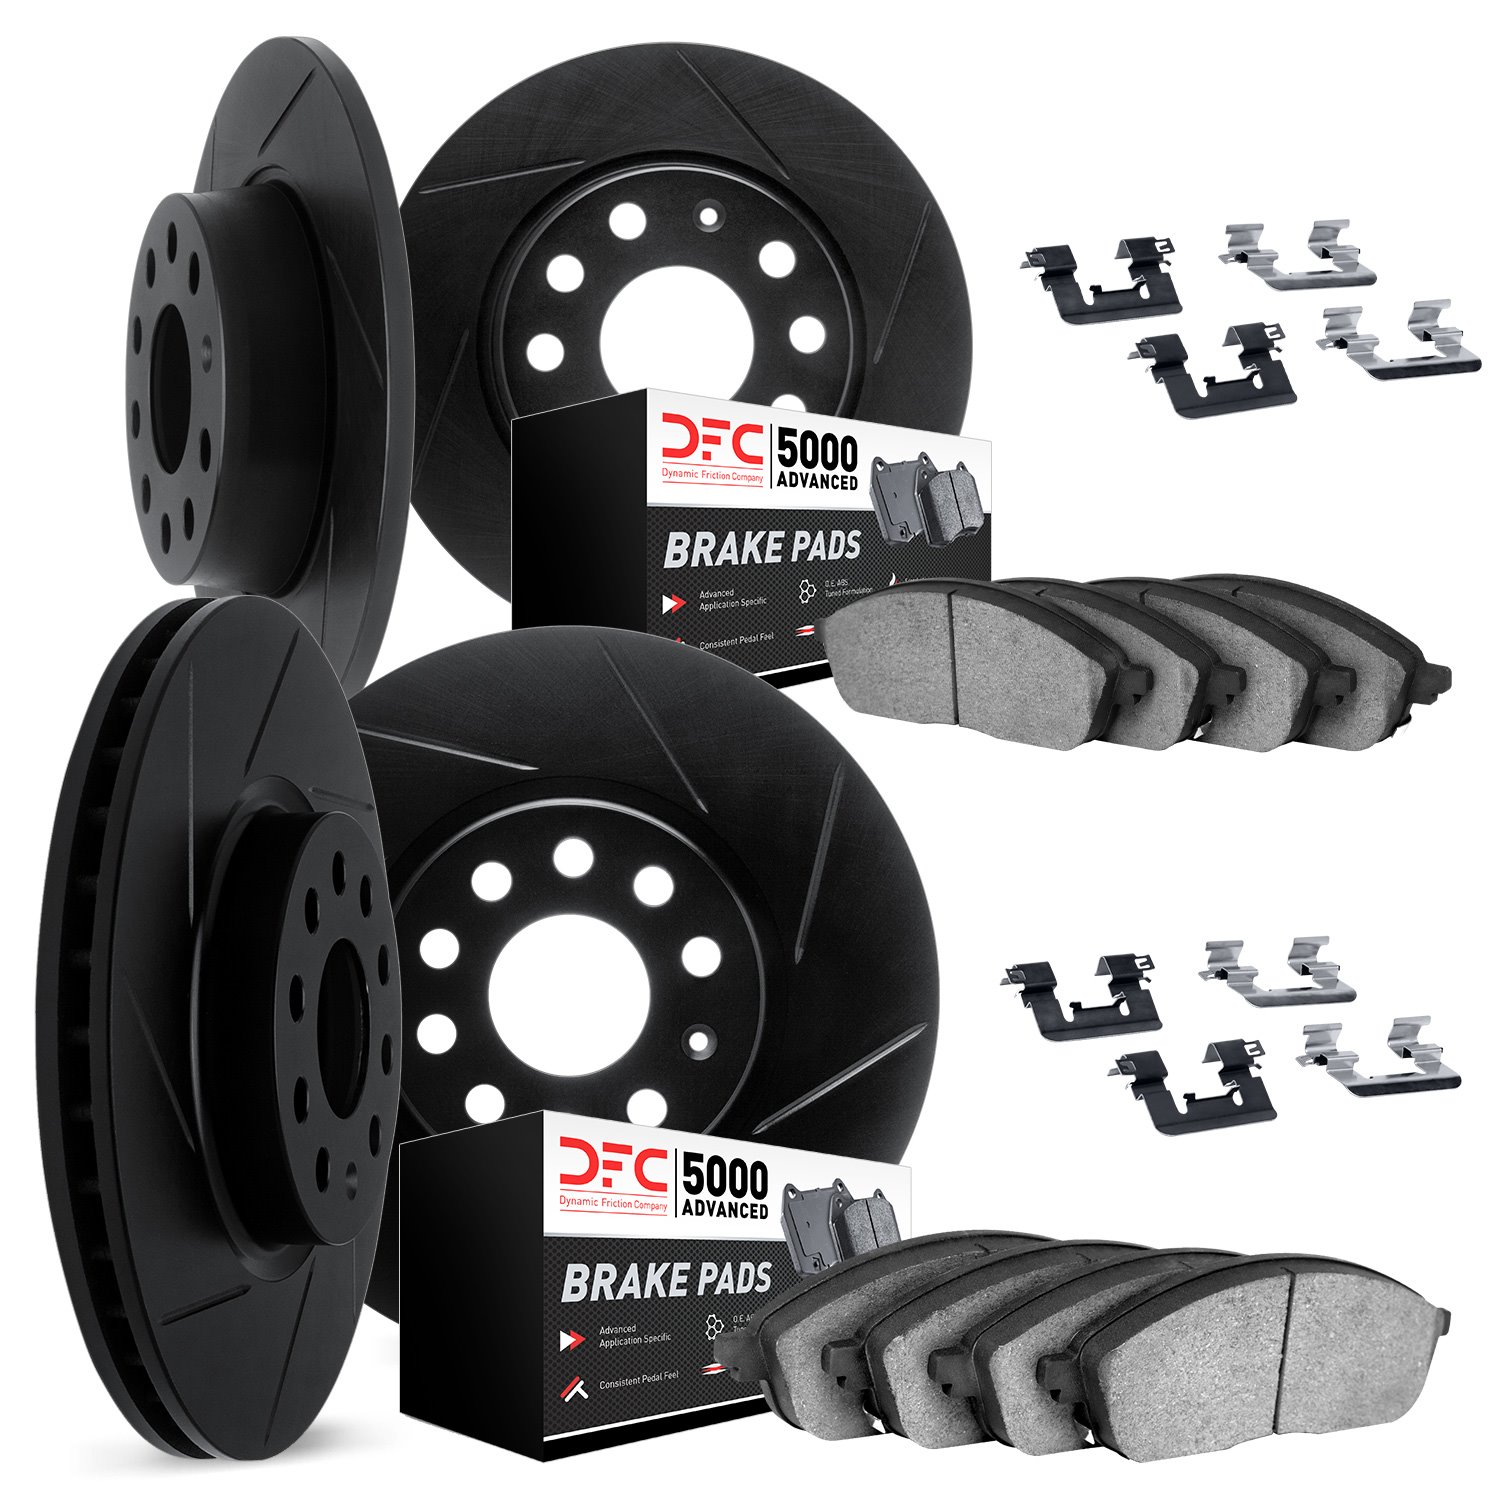 3514-54119 Slotted Brake Rotors w/5000 Advanced Brake Pads Kit & Hardware [Black], 2015-2020 Ford/Lincoln/Mercury/Mazda, Positio